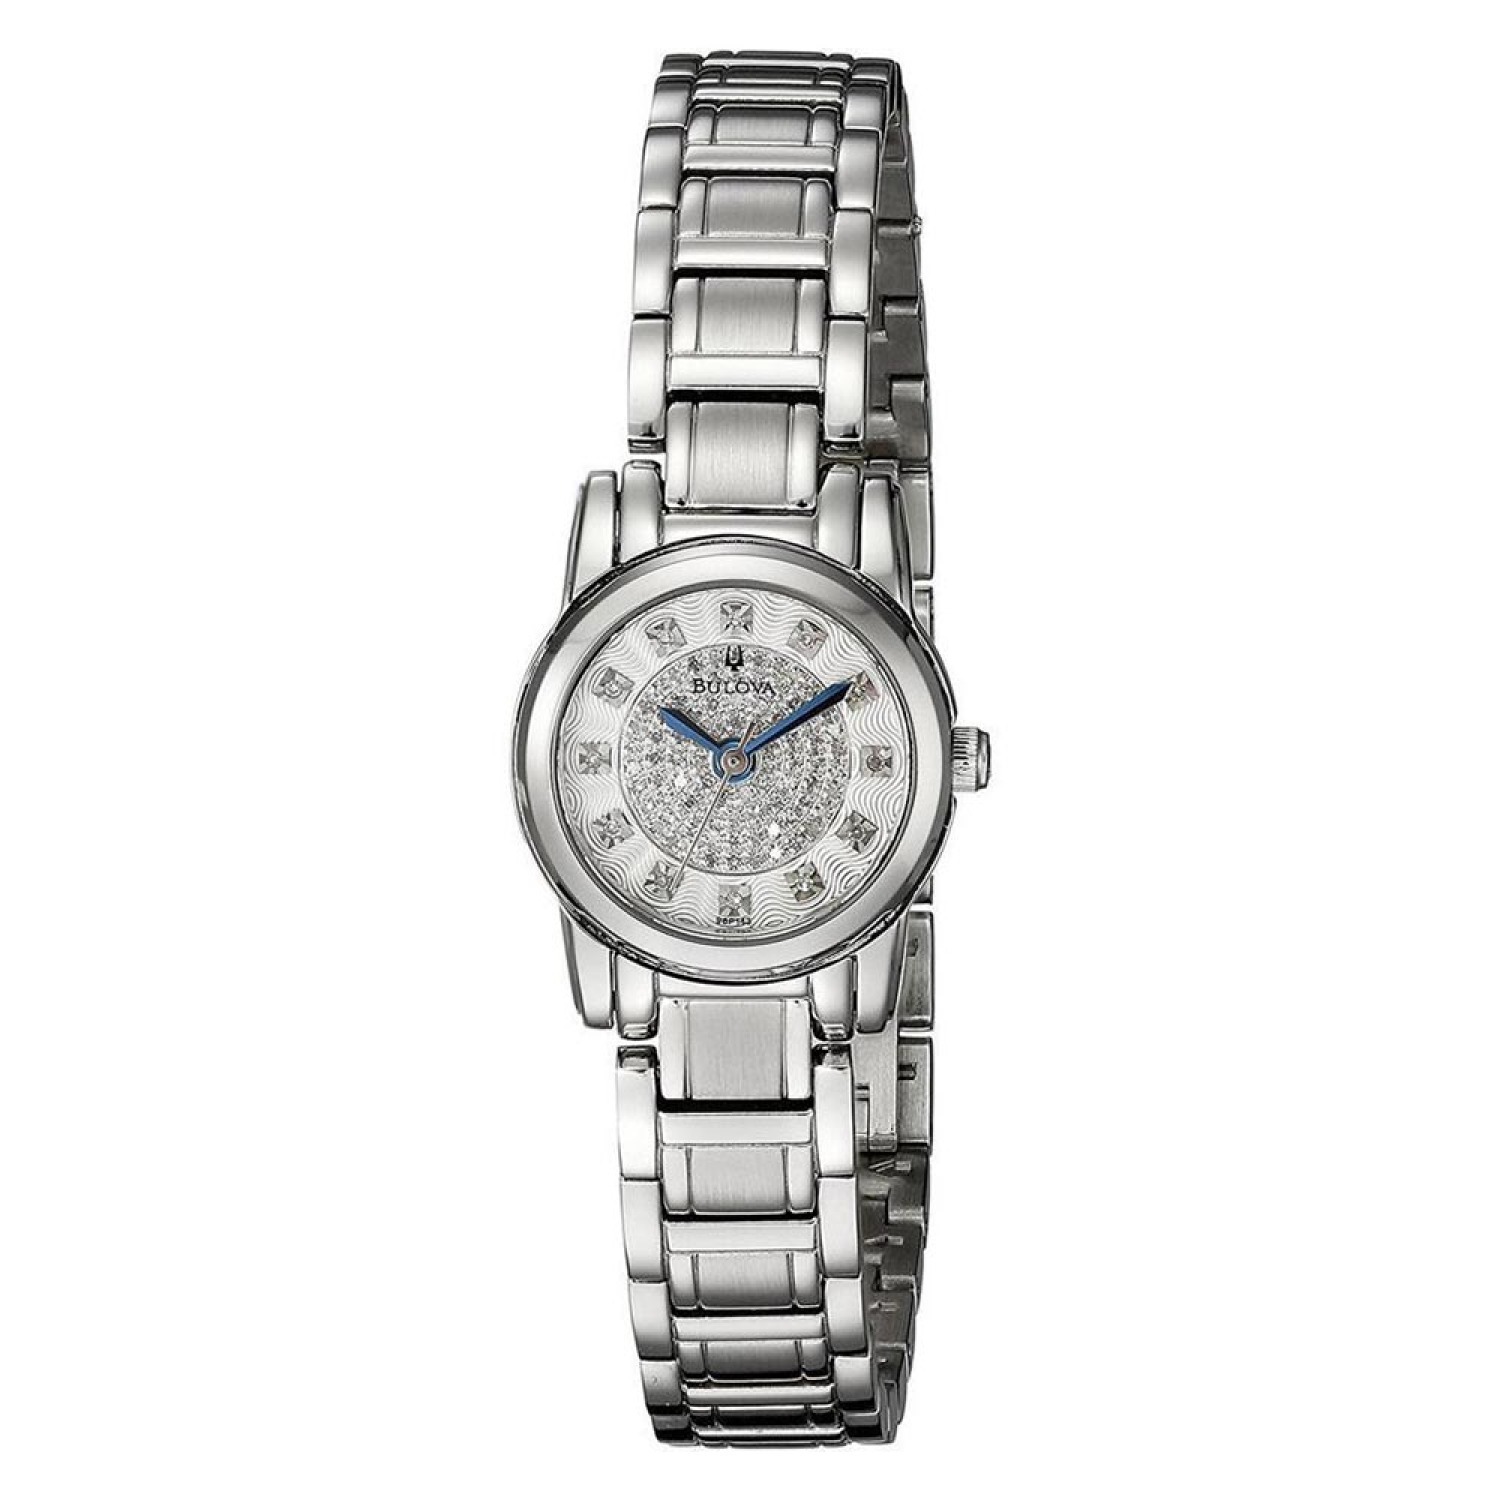 Bulova Women's Highbridge Diamond Watch Stainless Steel Case and Bracelet $98.81 + Free Shipping